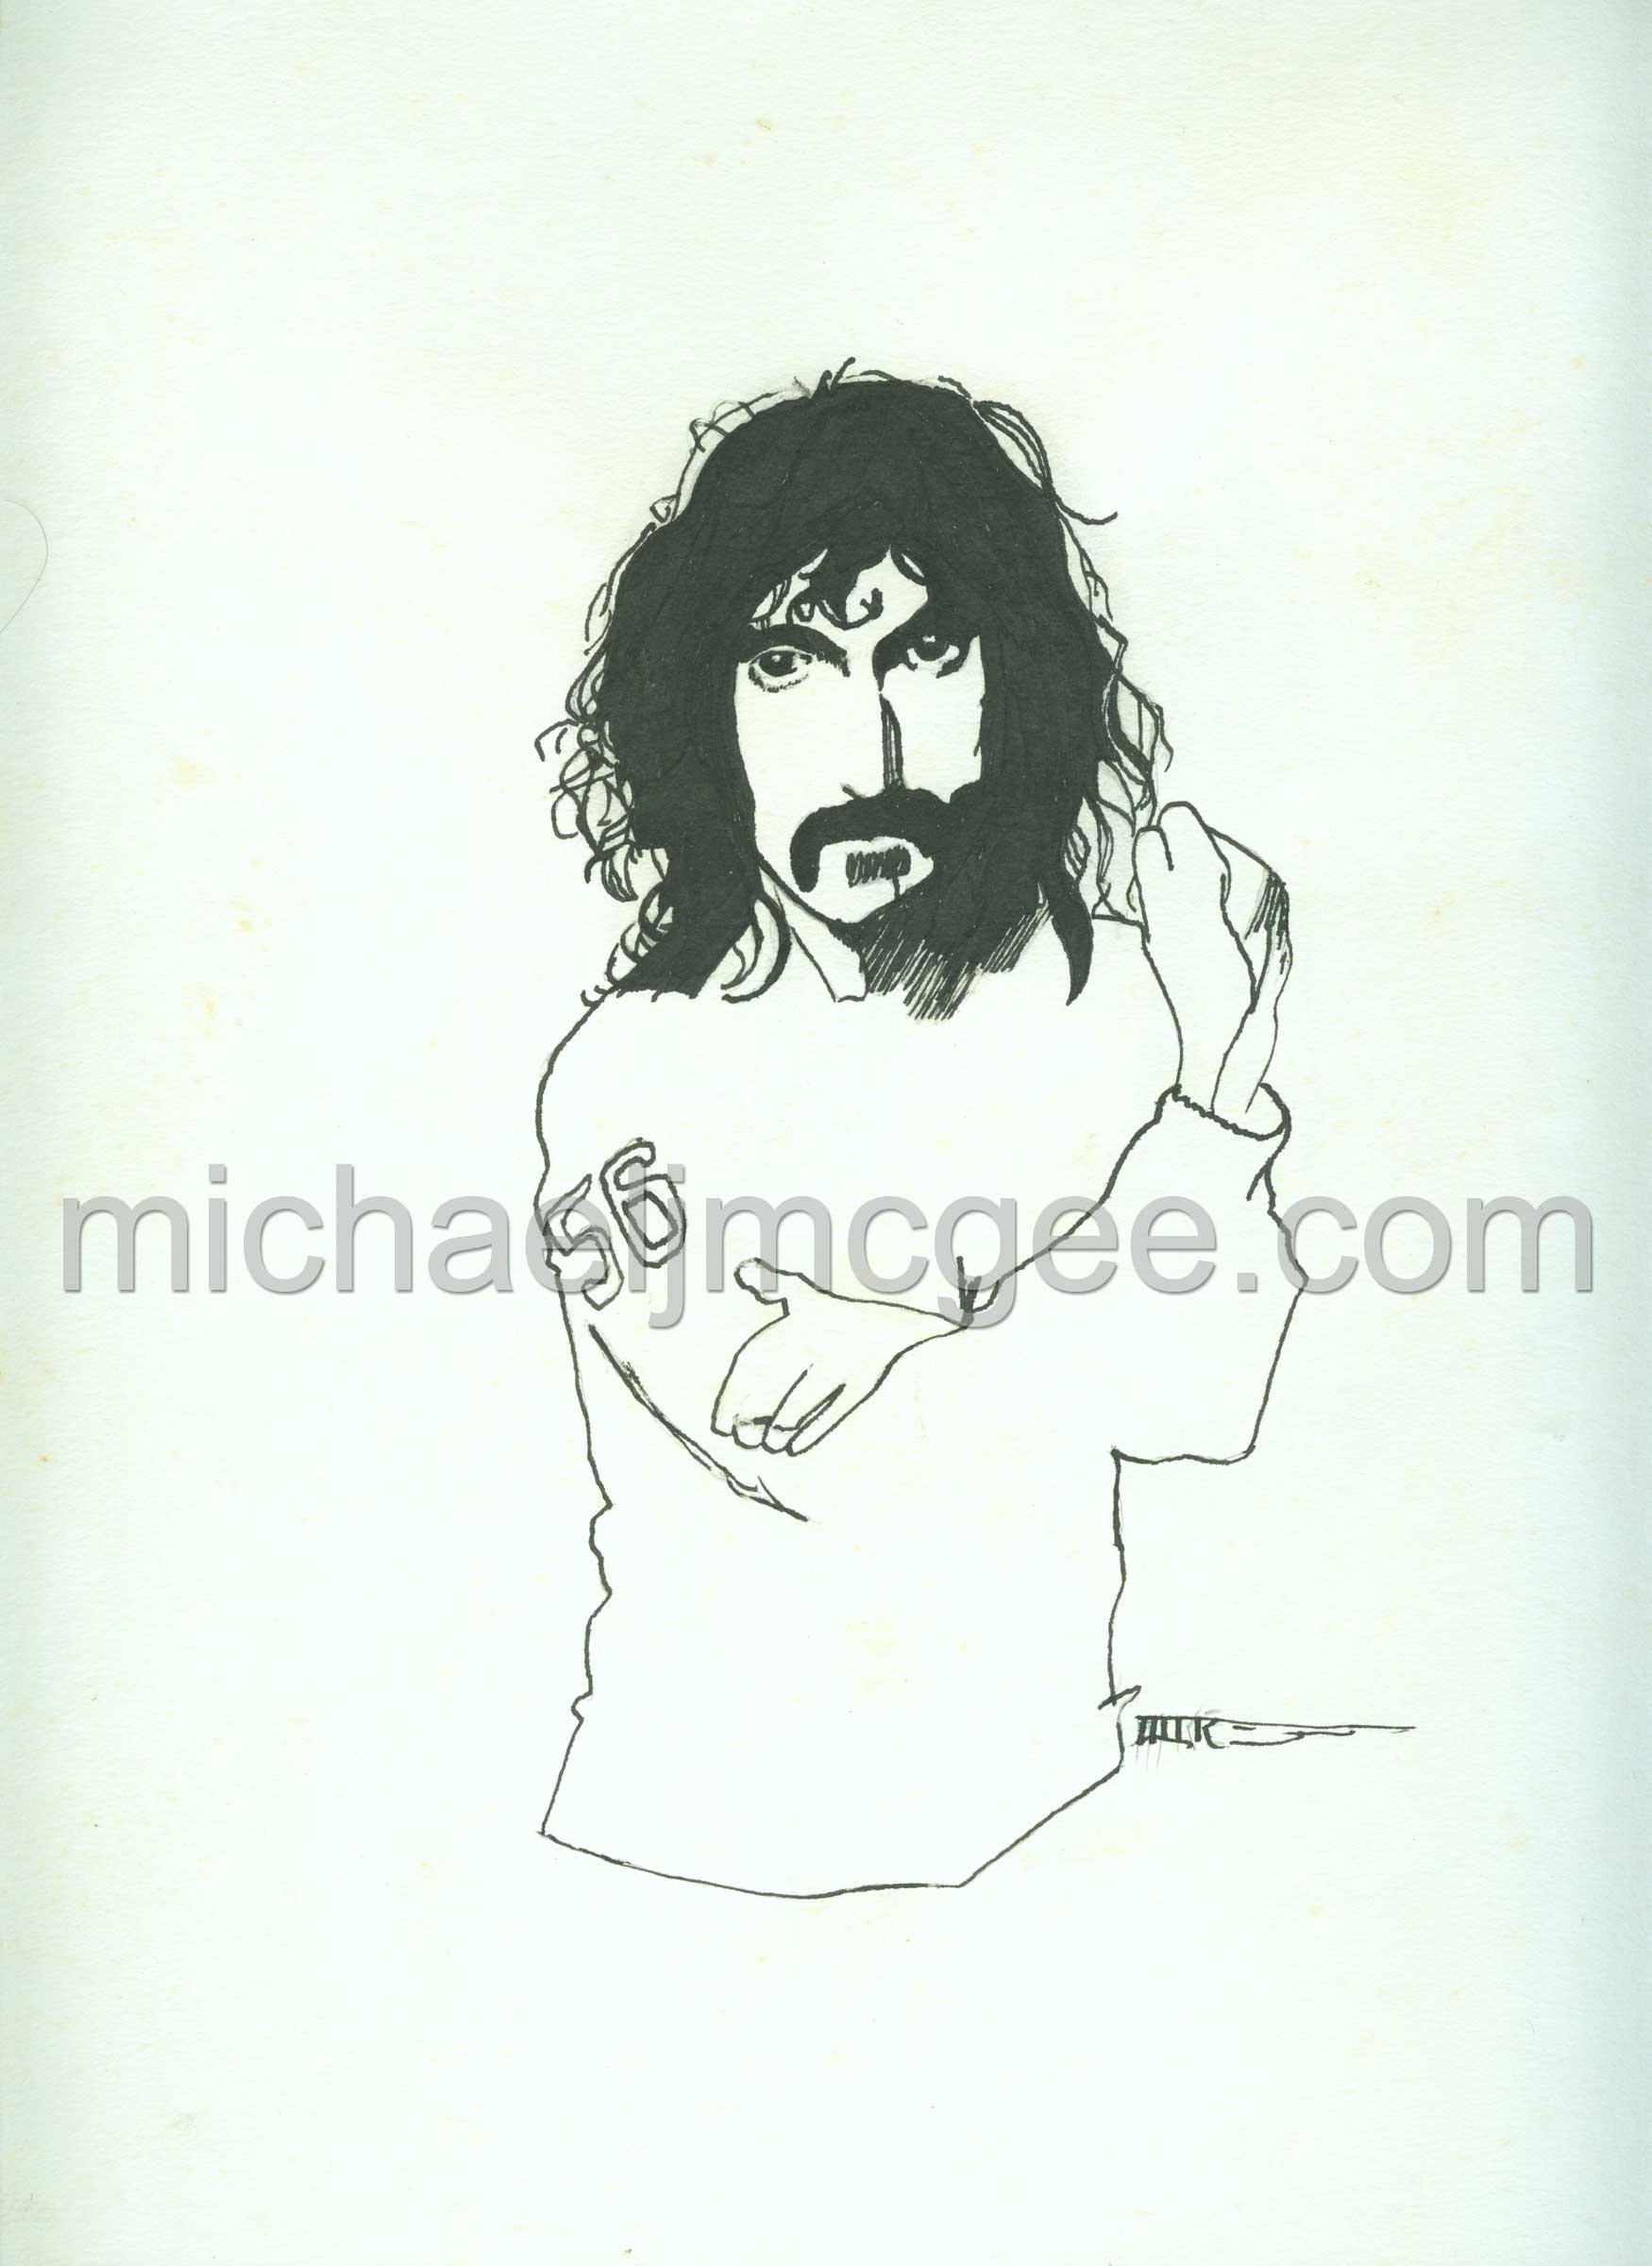 Frank Zappa / MJM Artworks / michaeljmcgee.com